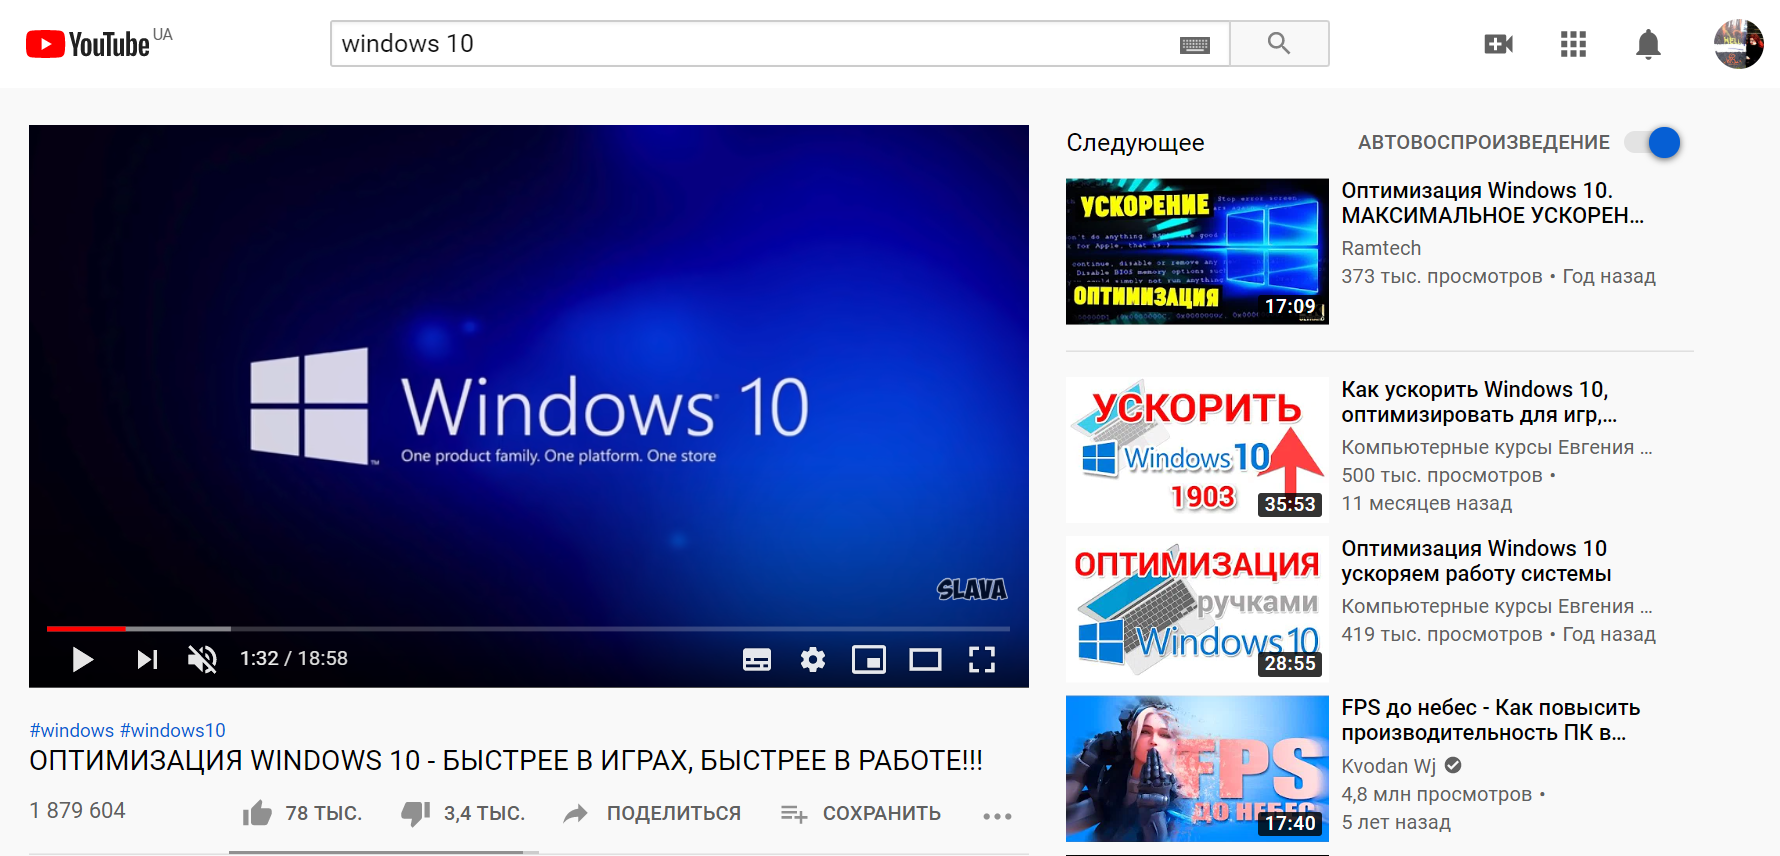 Похожие видео в YouTube по тегу «windows 10»